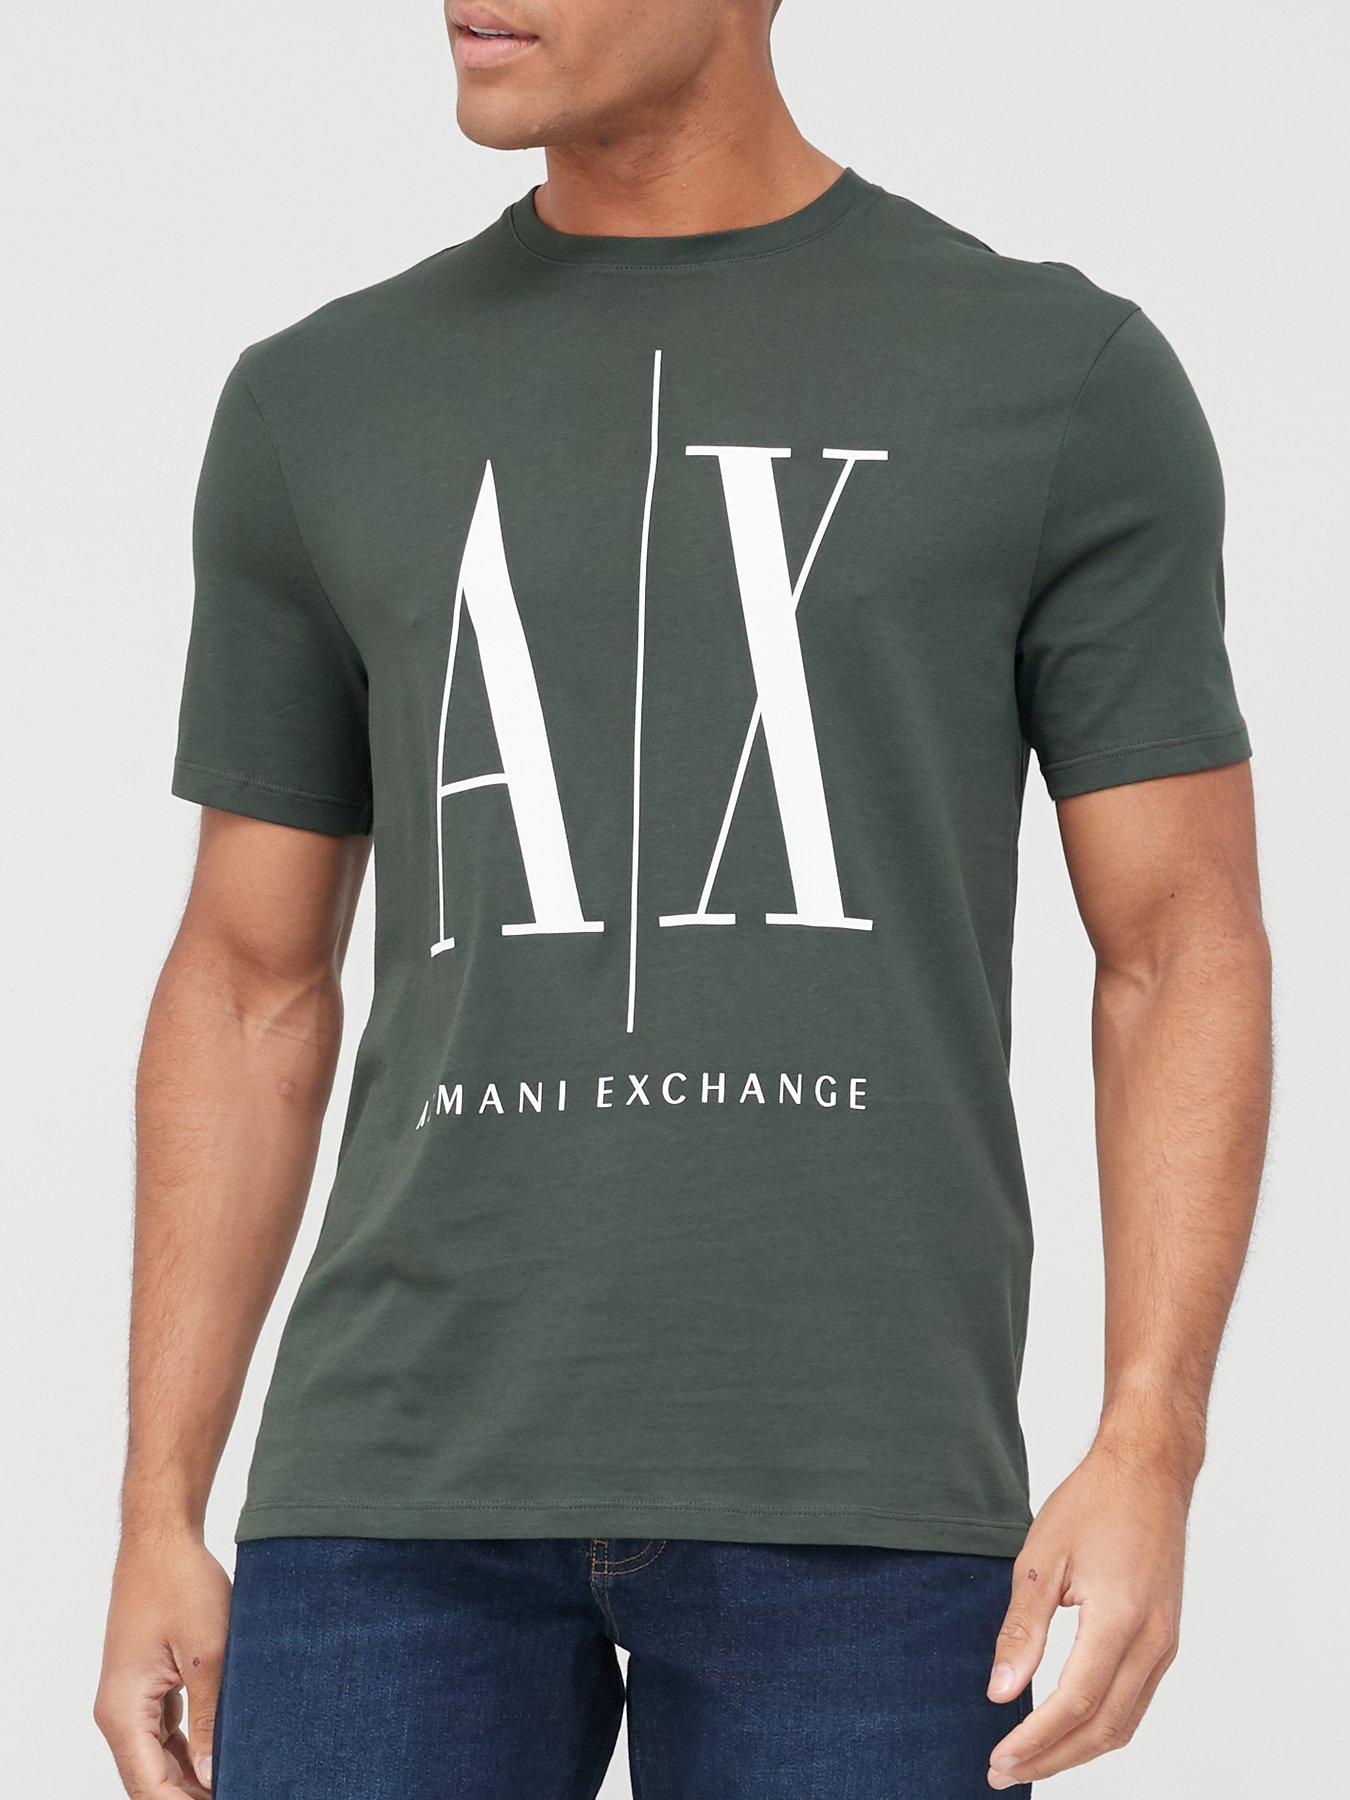 armani shirts price